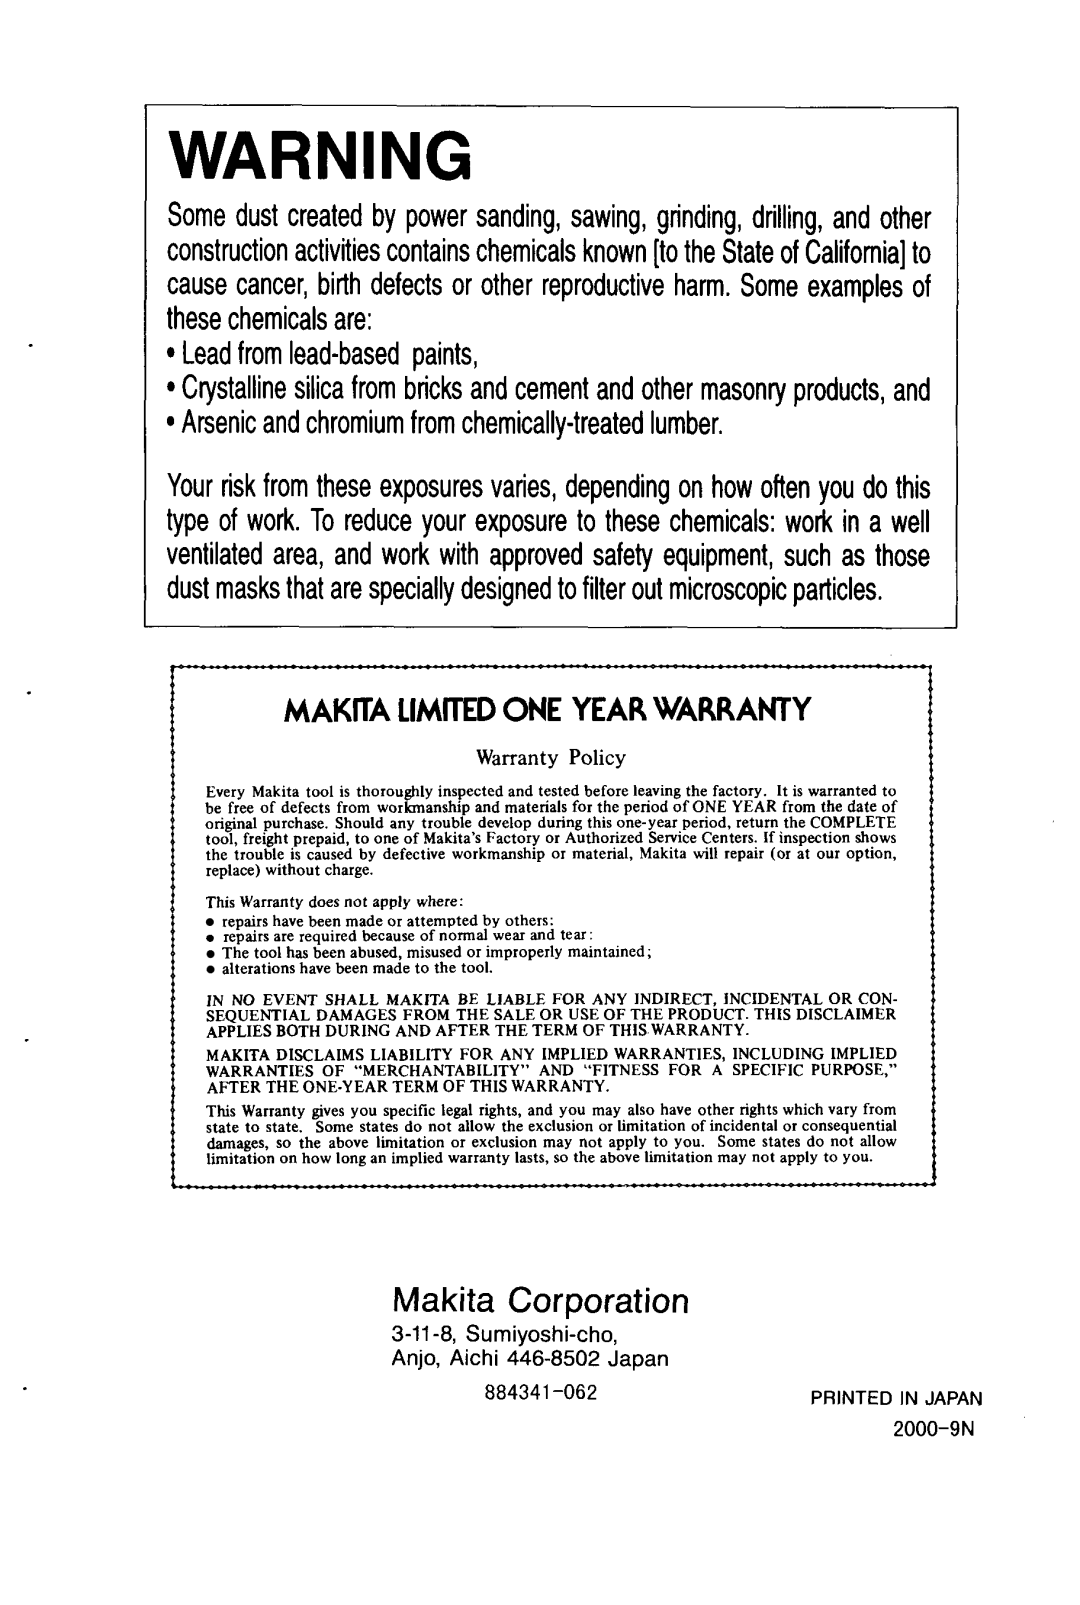 Makita WLAR-L11-L instruction manual Makita Corporation, MAKmA LIMITED ONE YEAR WARRANTY, Lead from lead-based paints 